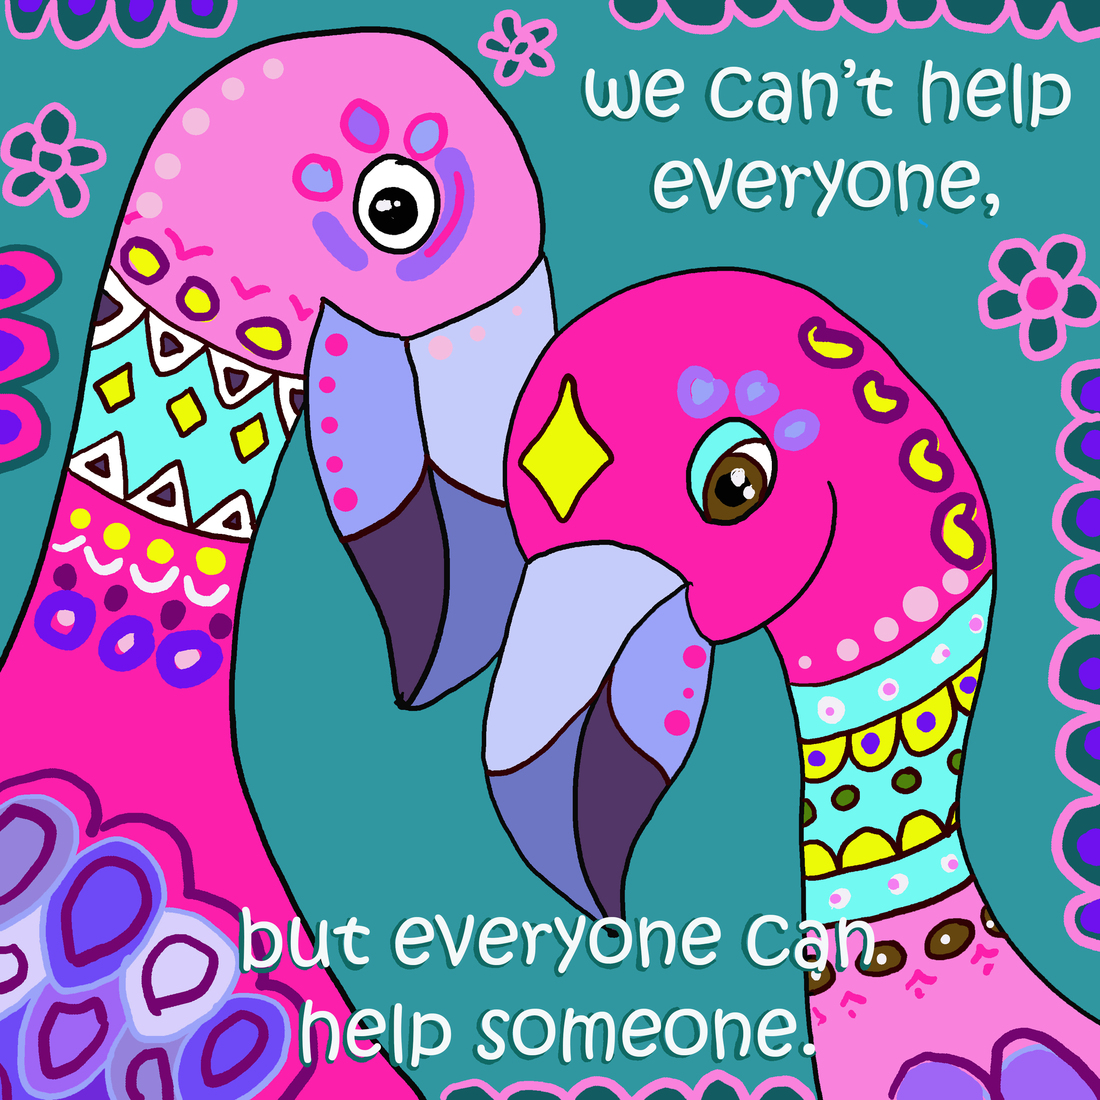 Everyone can help someone.